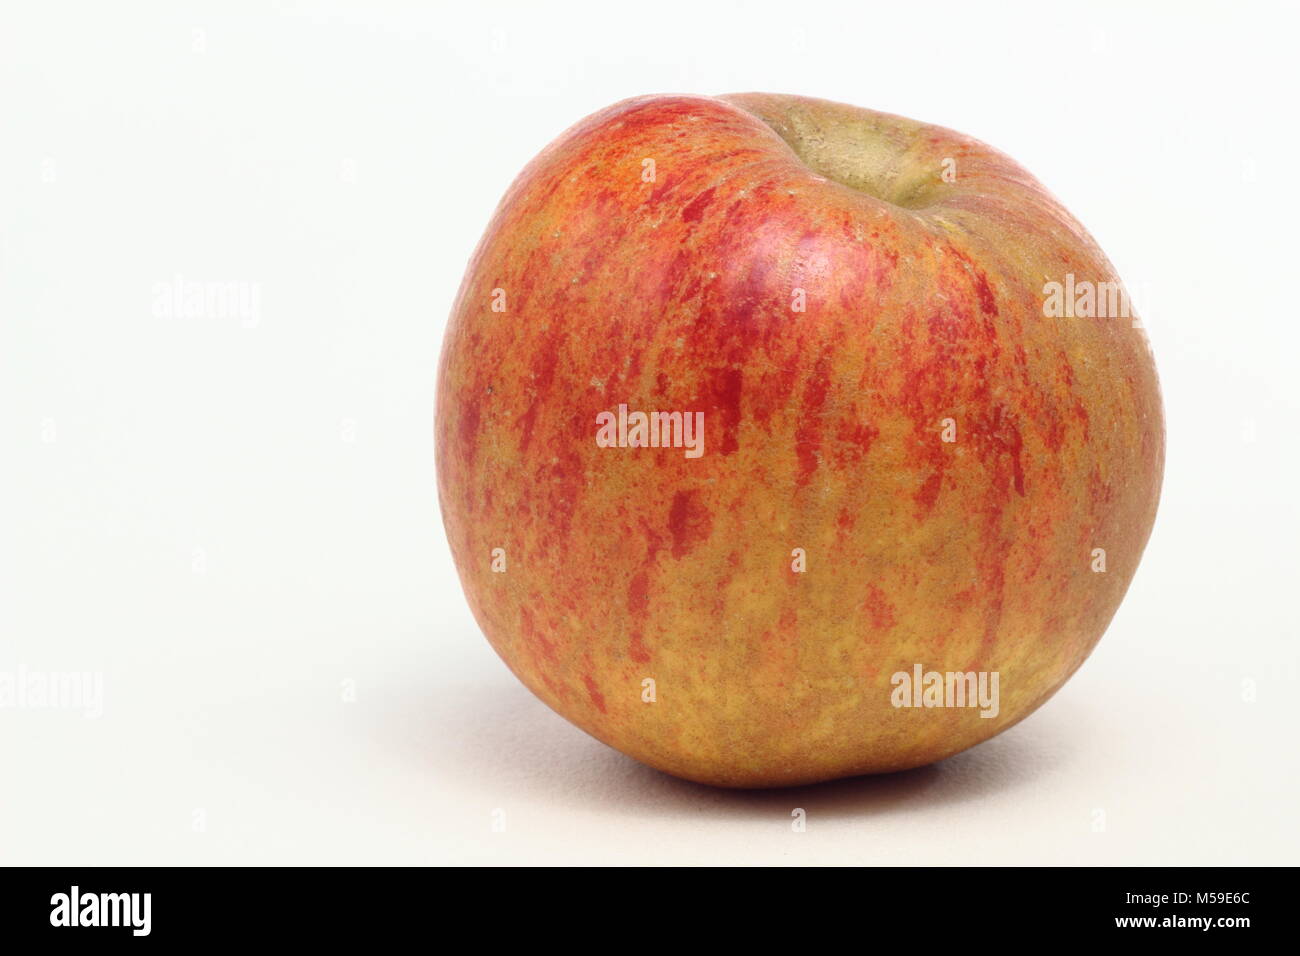 Malus domestica 'Margil', an heirloom English apple variety, white background, UK Stock Photo